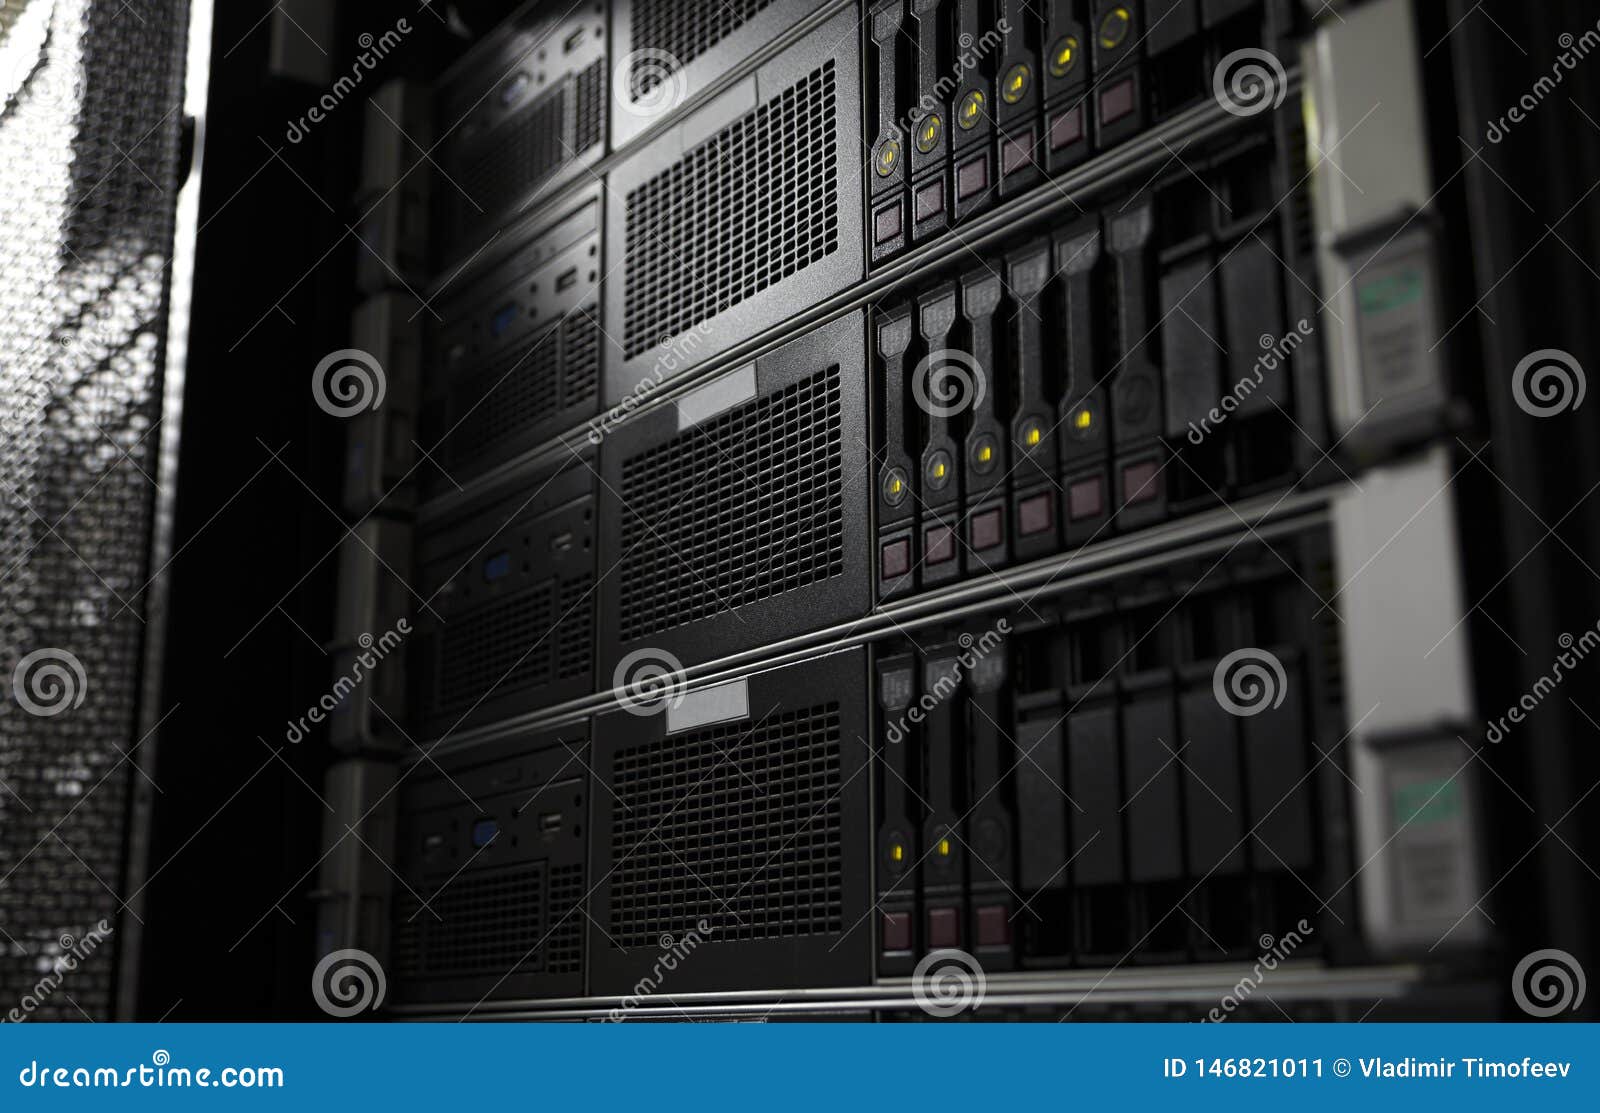 rack mounted system storage blade servers background selective focus